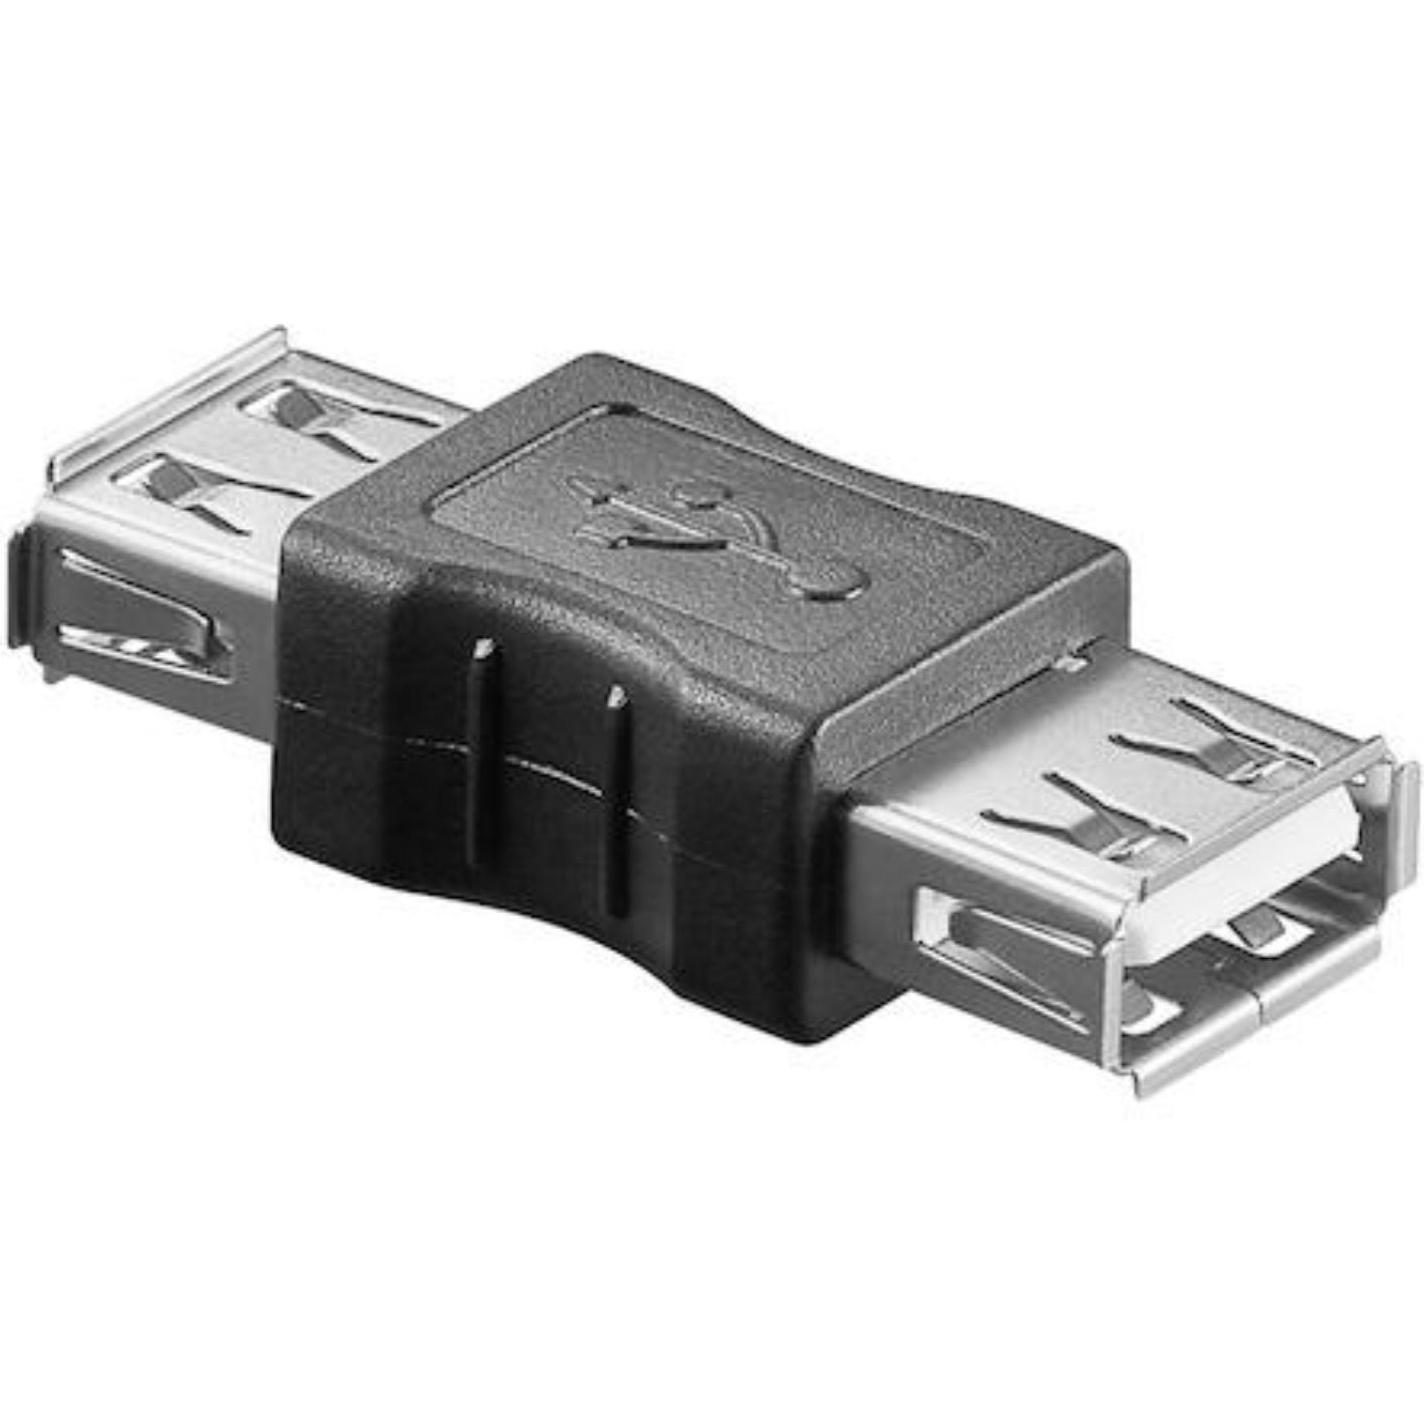 USB adapter - Allteq